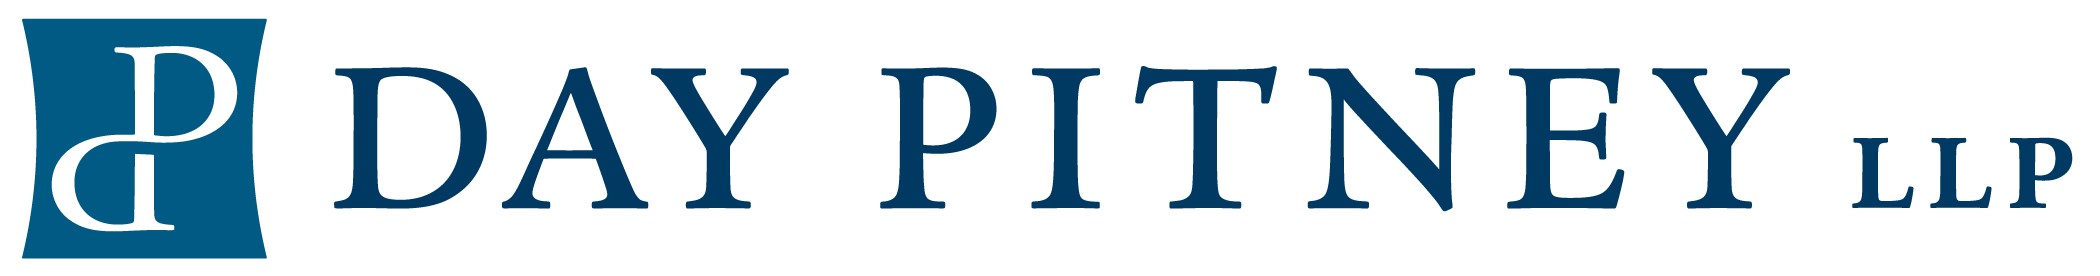 Day Pitney logo_RGB-300dpi-JPEG